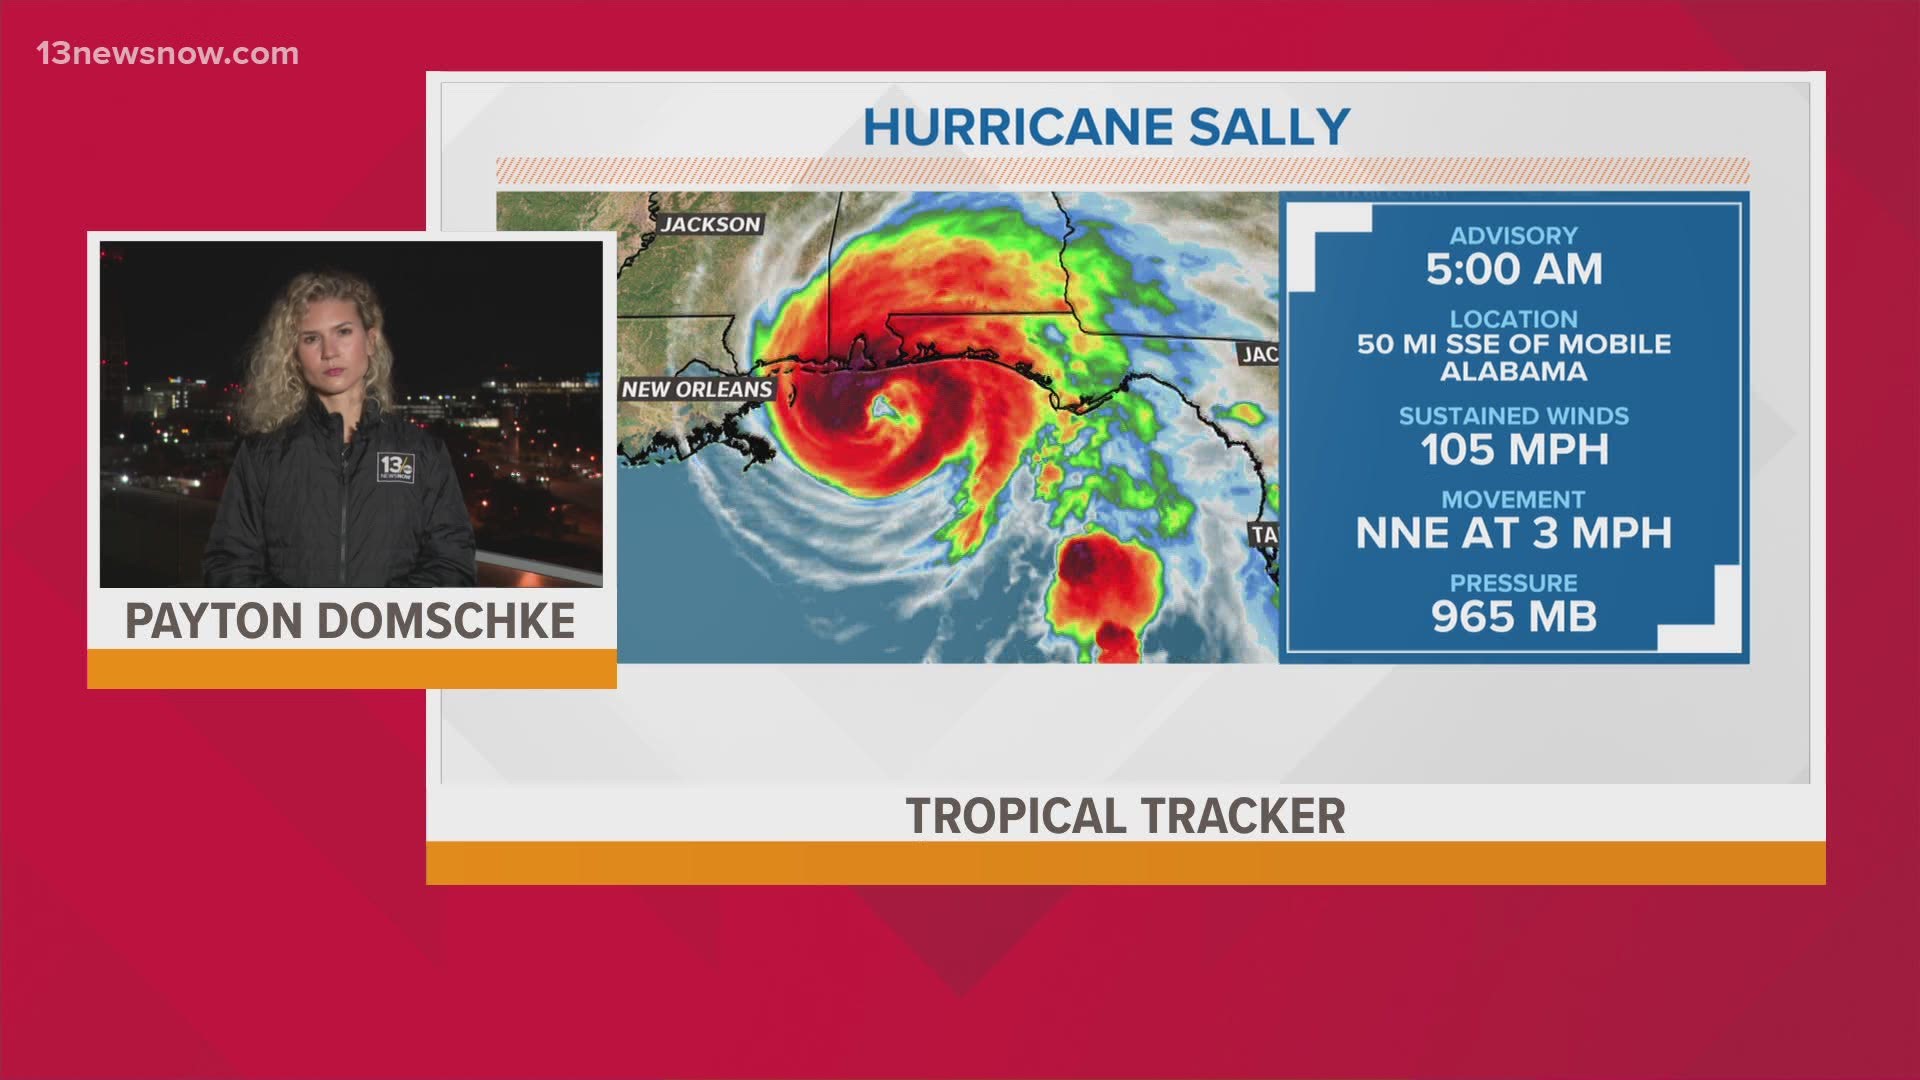 Hurricane Sally is progressing to the Gulf Coast states.